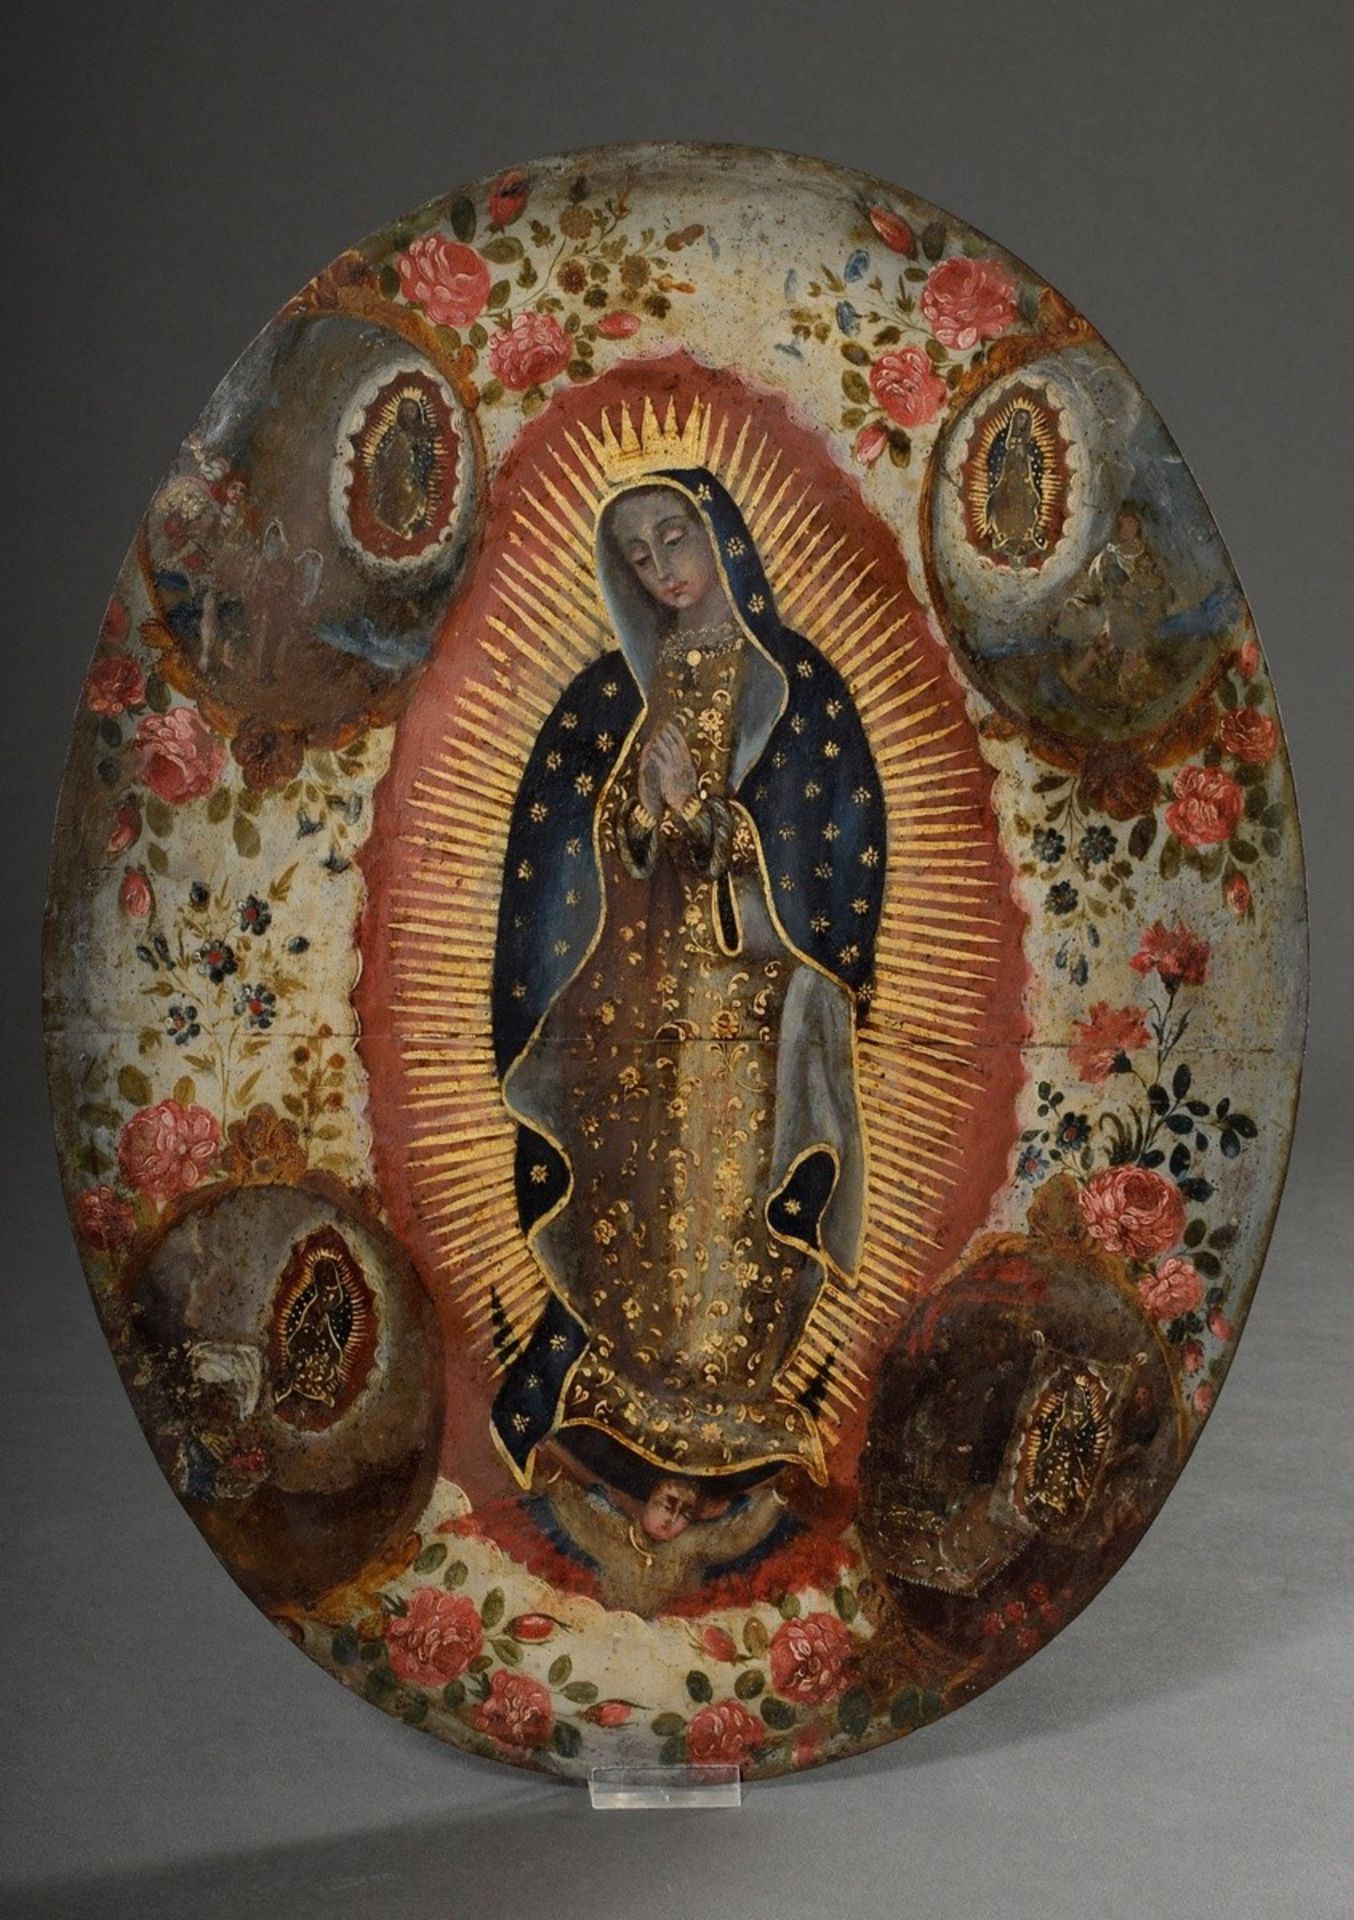 Südamerikanisches Andachtsbild "Maria Immaculata", 18./19.Jh., Öl/Metall, 45,5x35cm (oval), Defekte